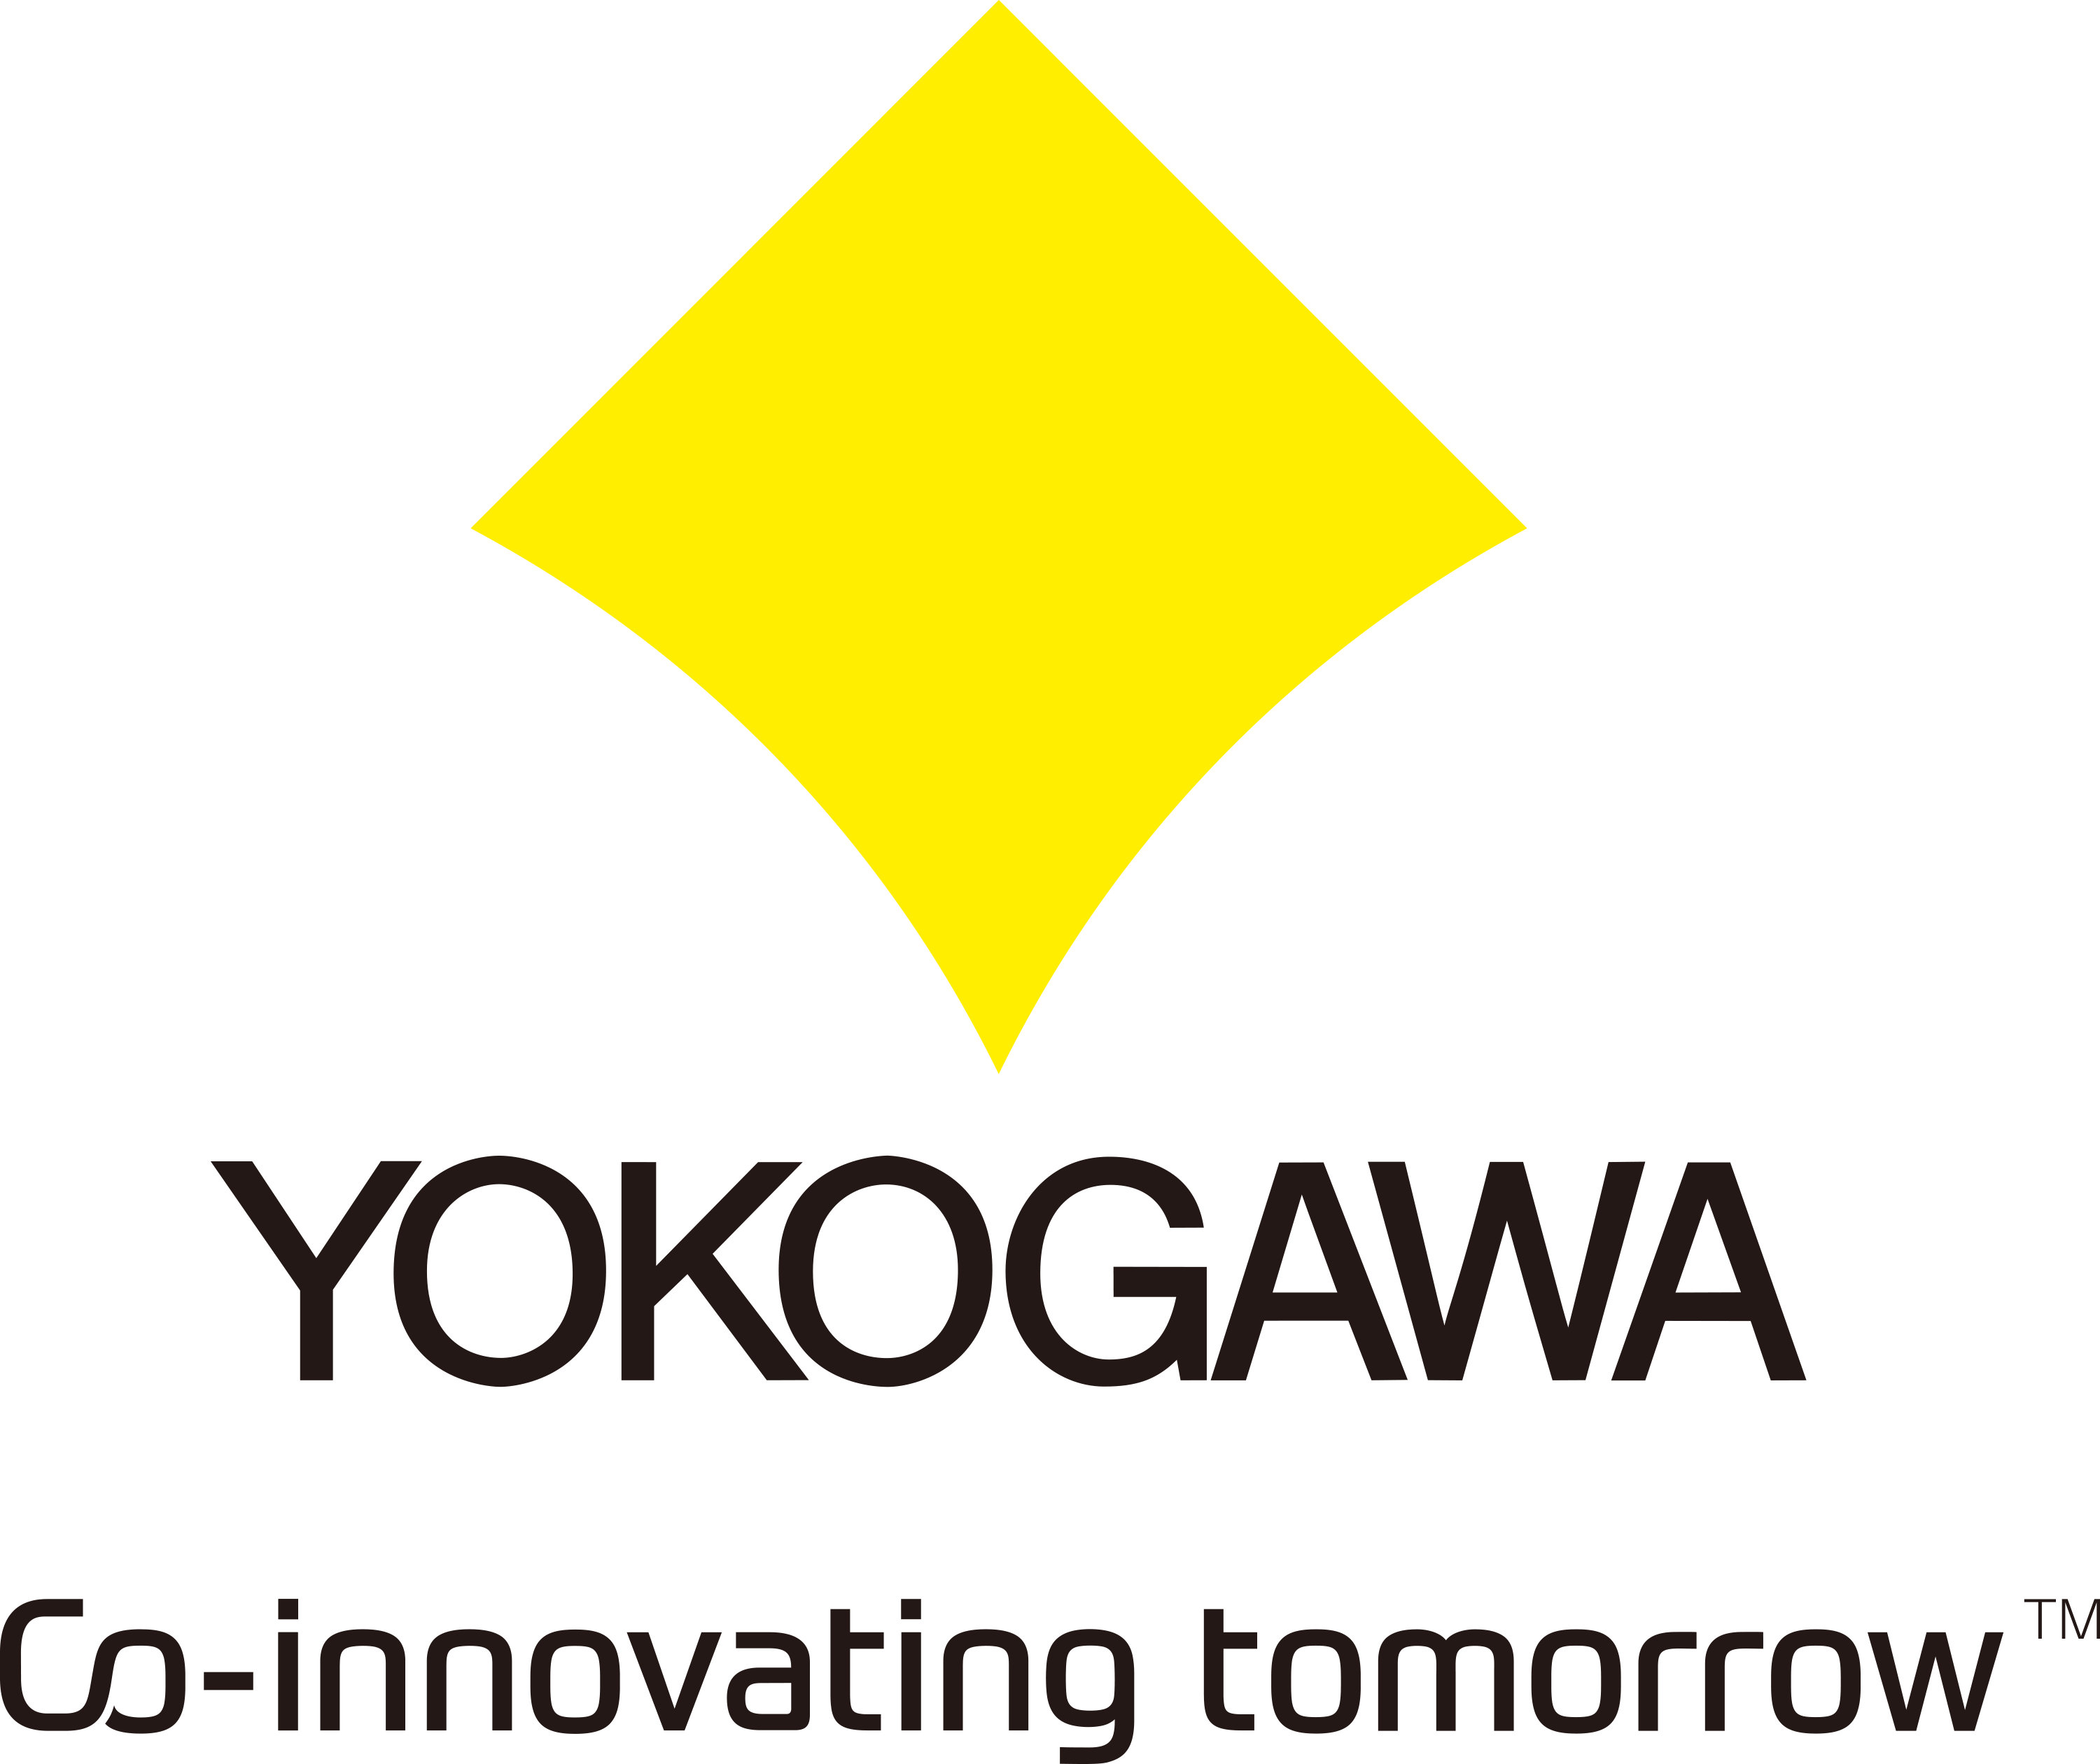 Yokogawa Bio Frontier Inc.